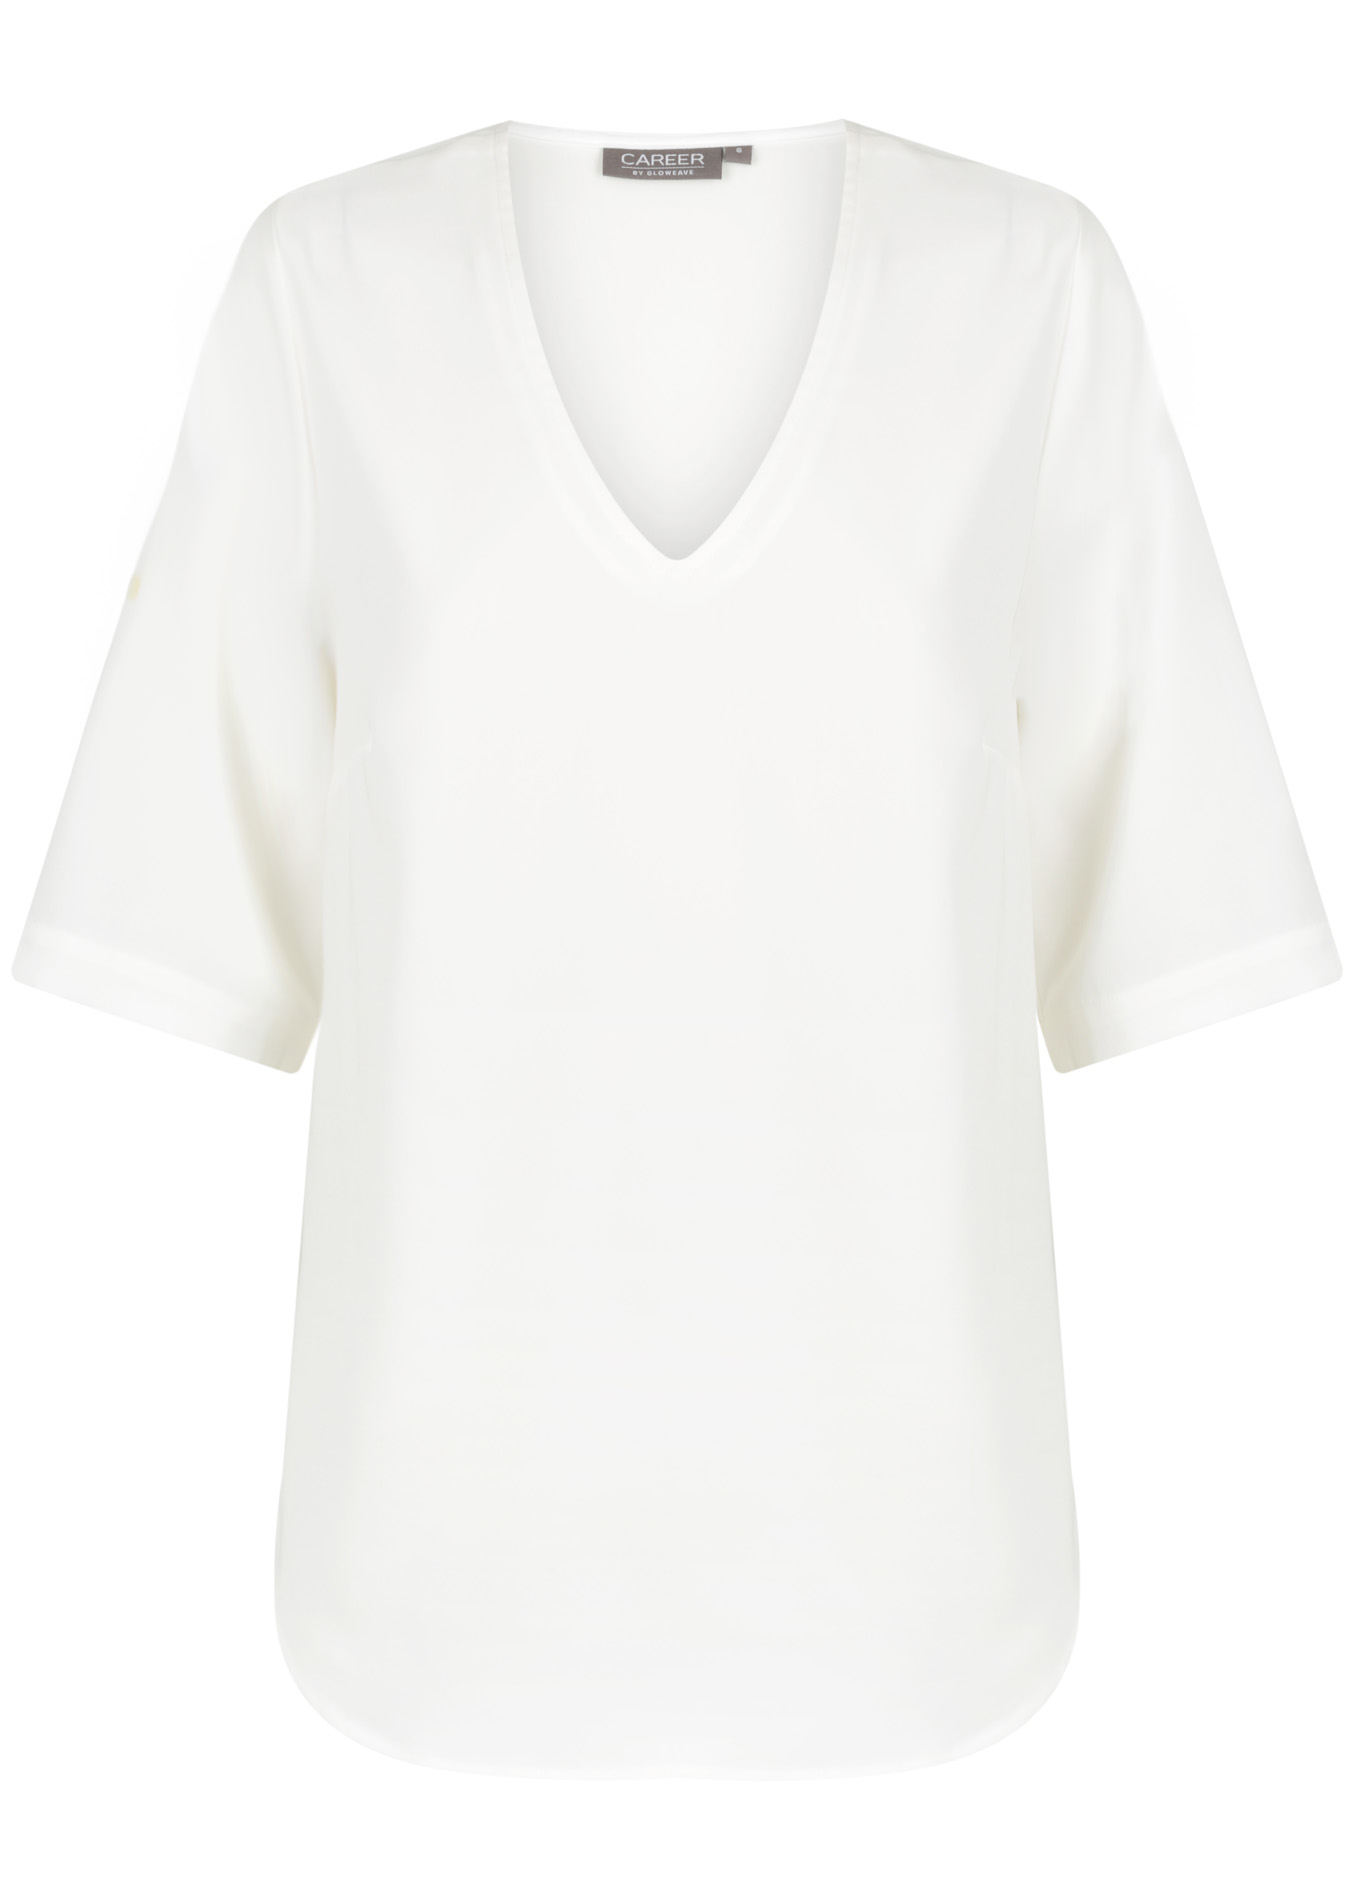 Reece Half Sleeve V-Neck Top - Ivory - Uniform Edit